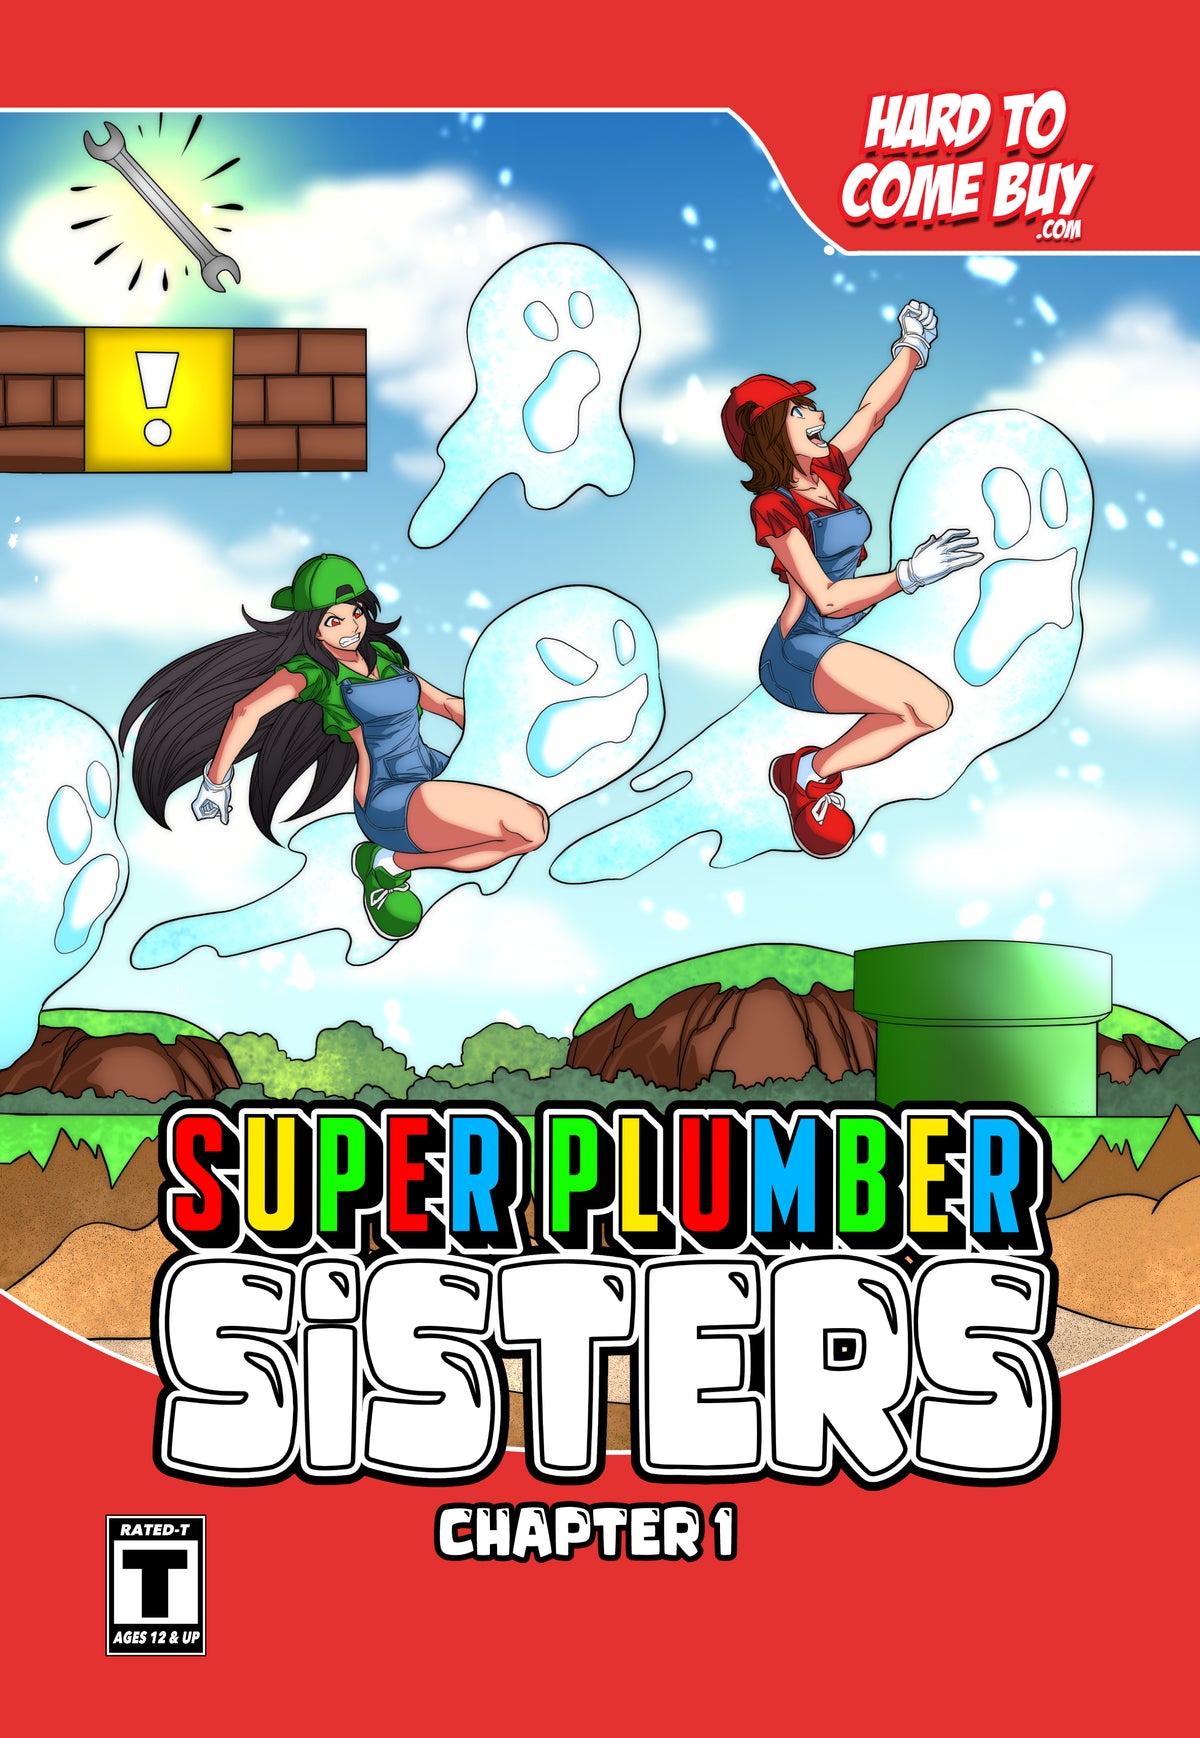 SUPER PLUMBER SISTERS  #1 - HTCB EXCLUSIVE SUPER MARIO Wii HOMAGE